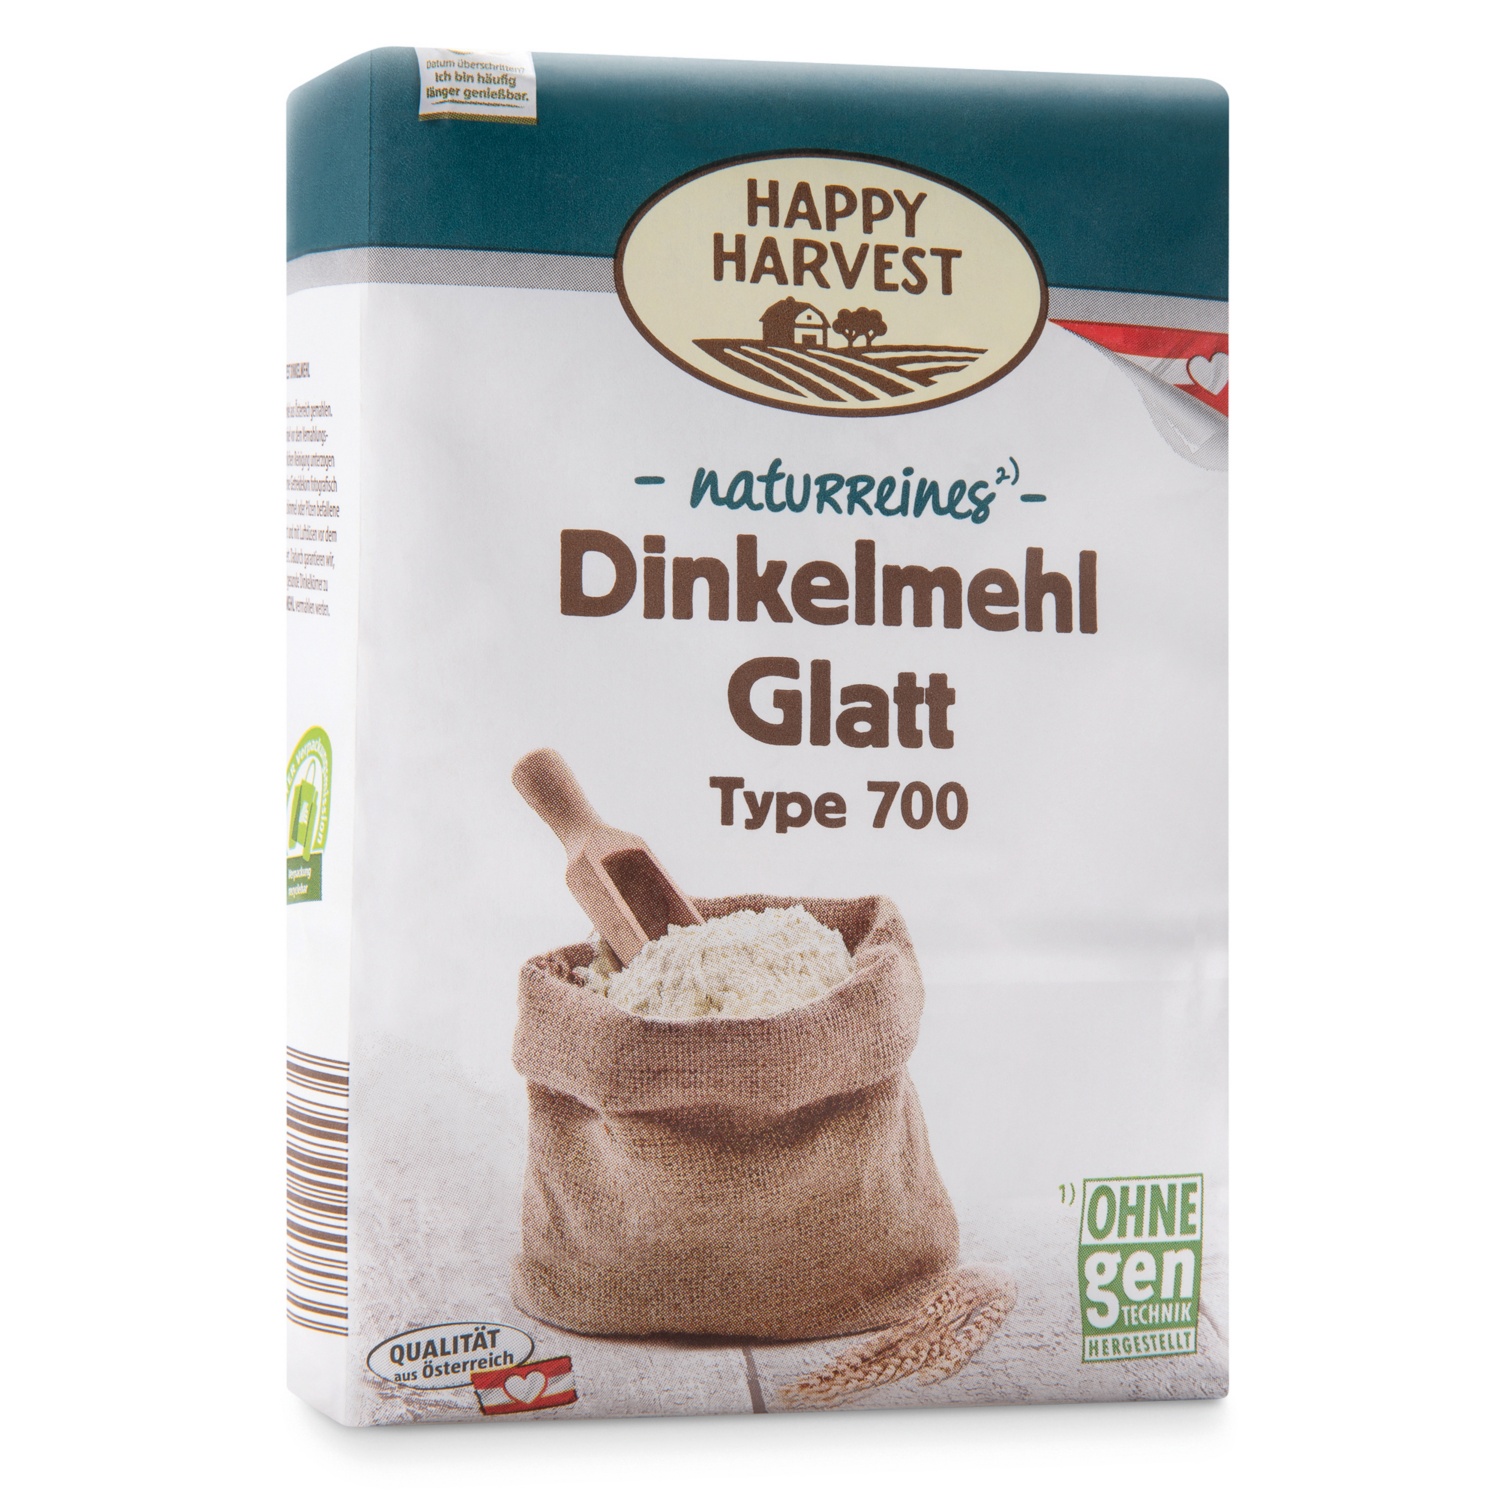 HAPPY HARVEST Dinkelmehl